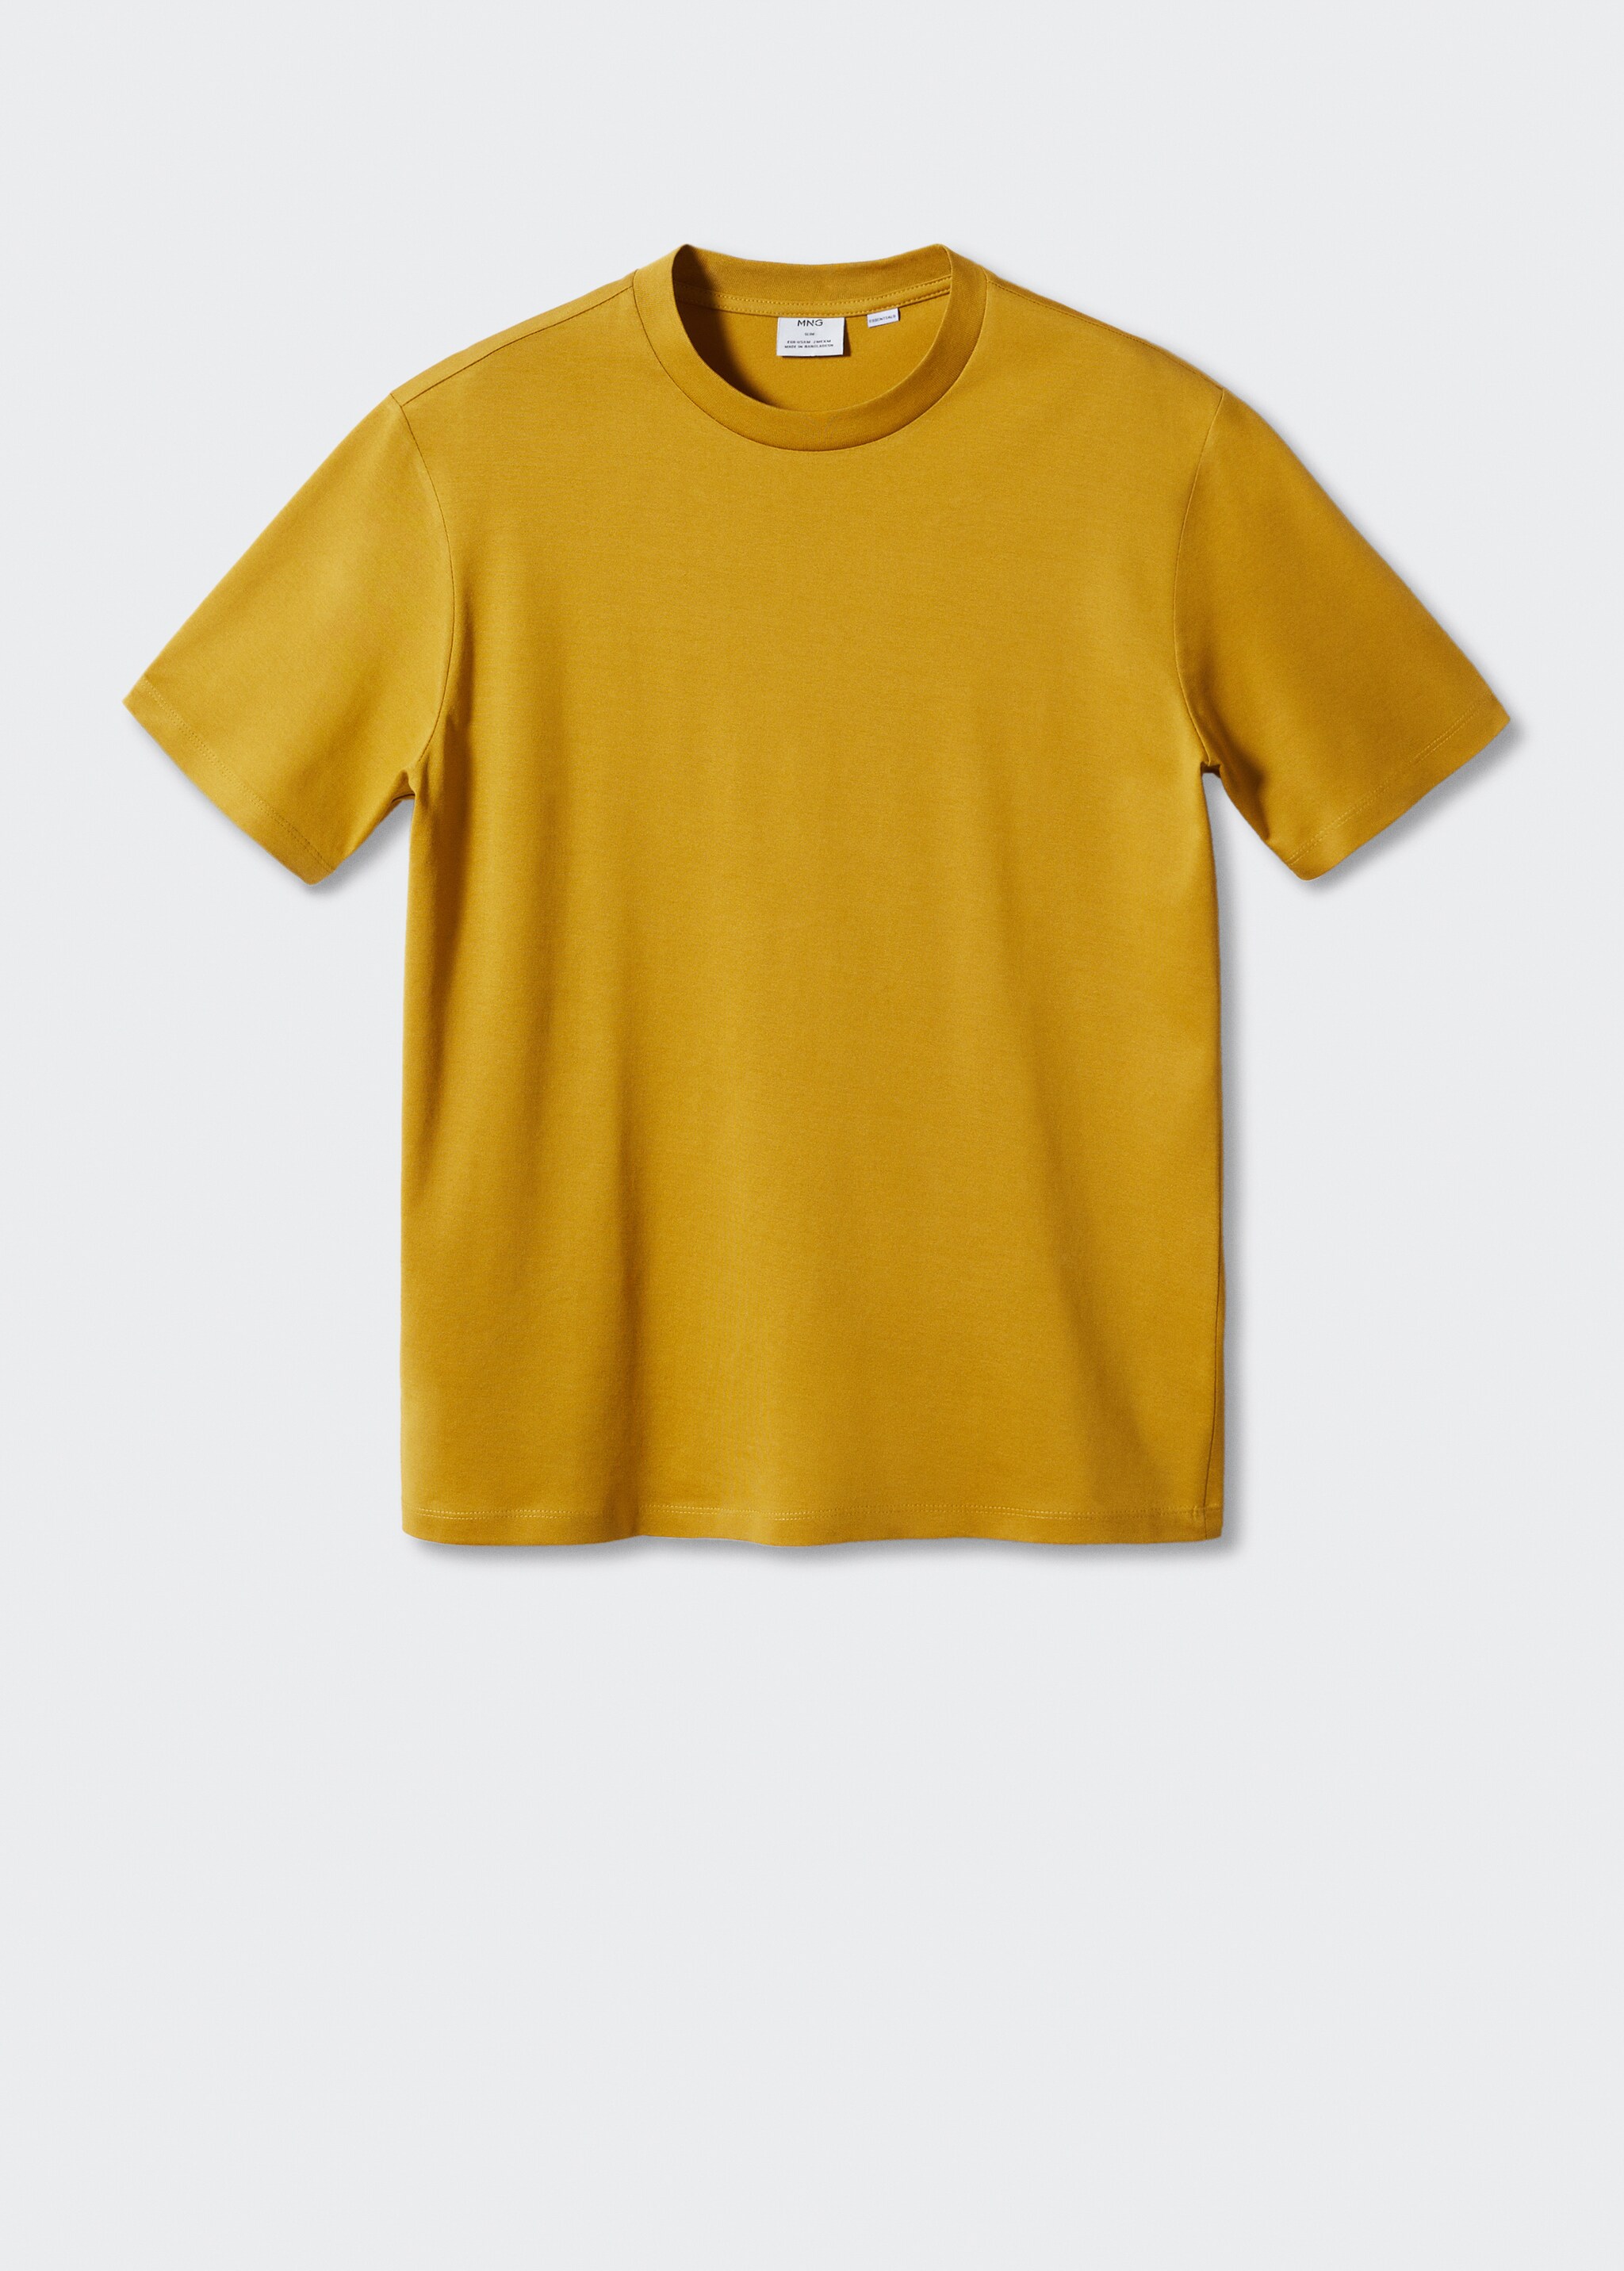 Camiseta básica mercerizada lightweight - Artículo sin modelo